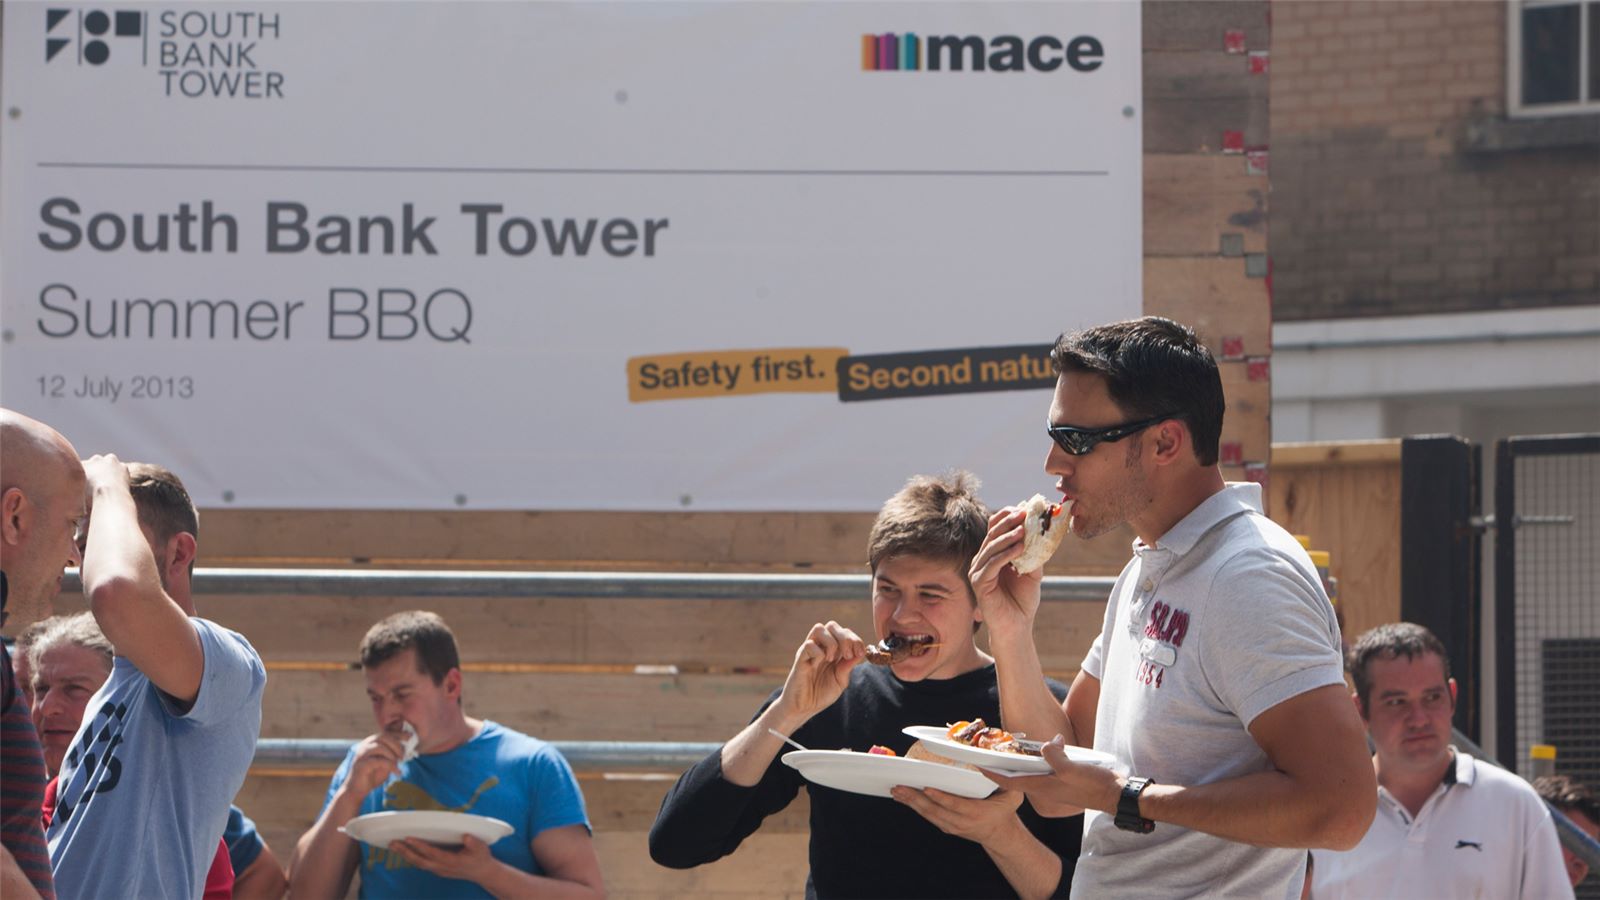 London South Bank Tower Summer BBQ - Mace Group